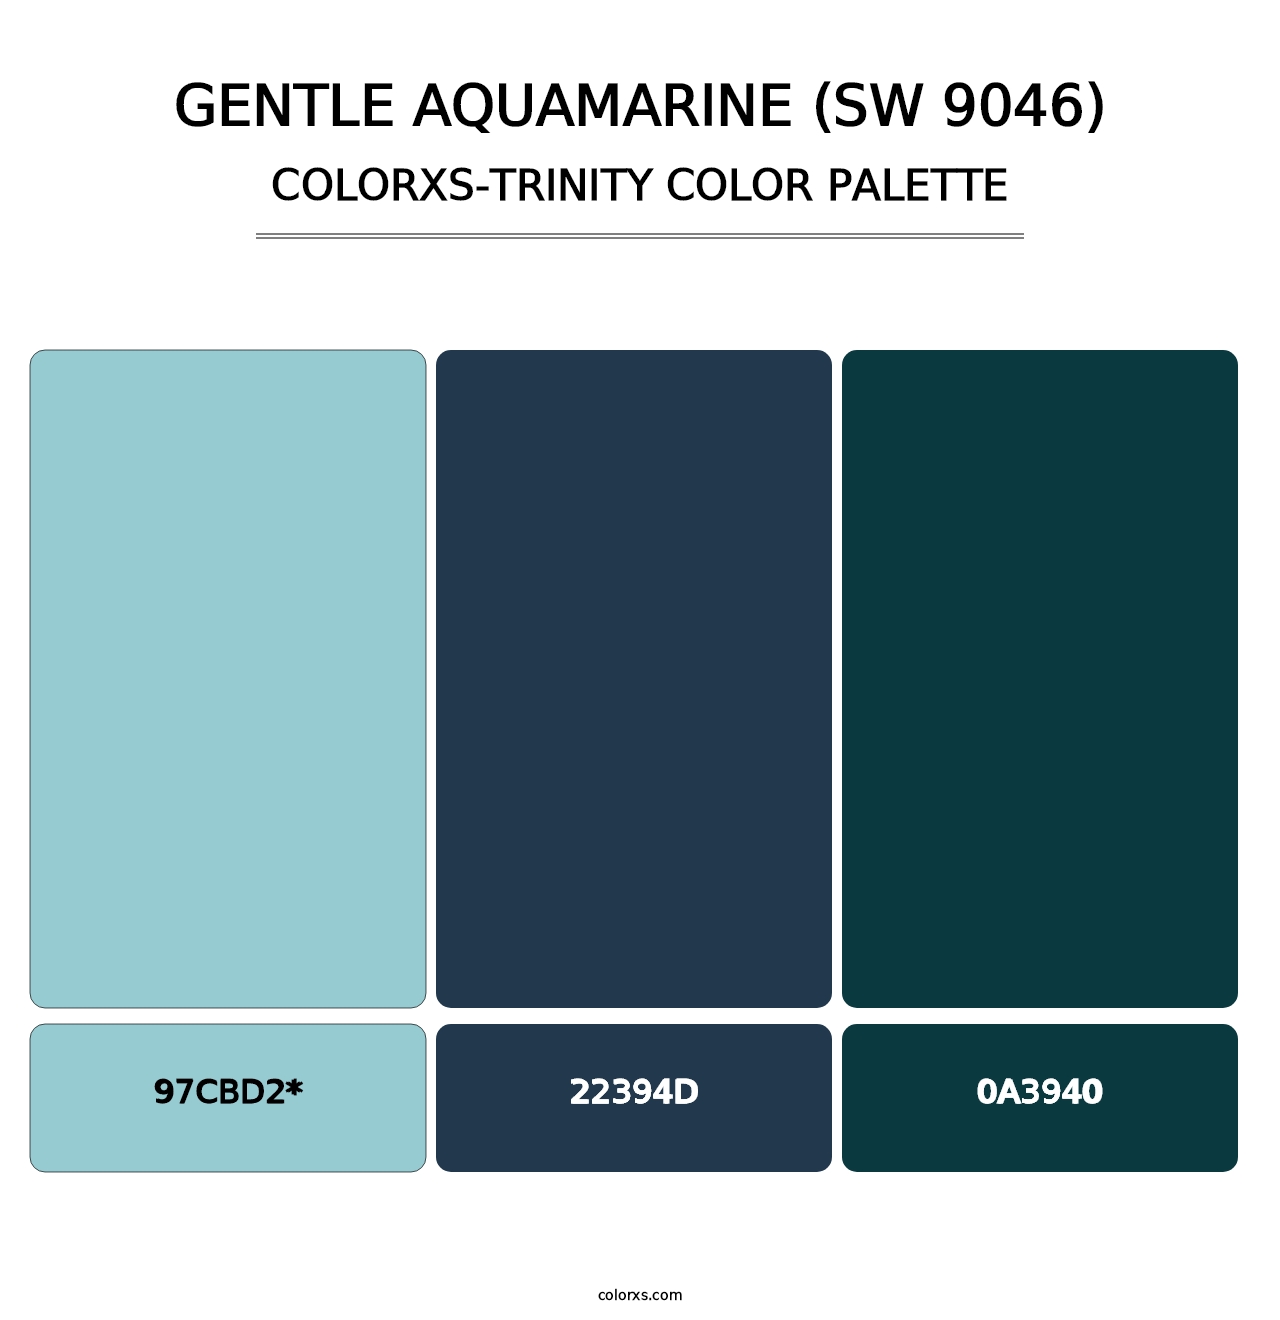 Gentle Aquamarine (SW 9046) - Colorxs Trinity Palette